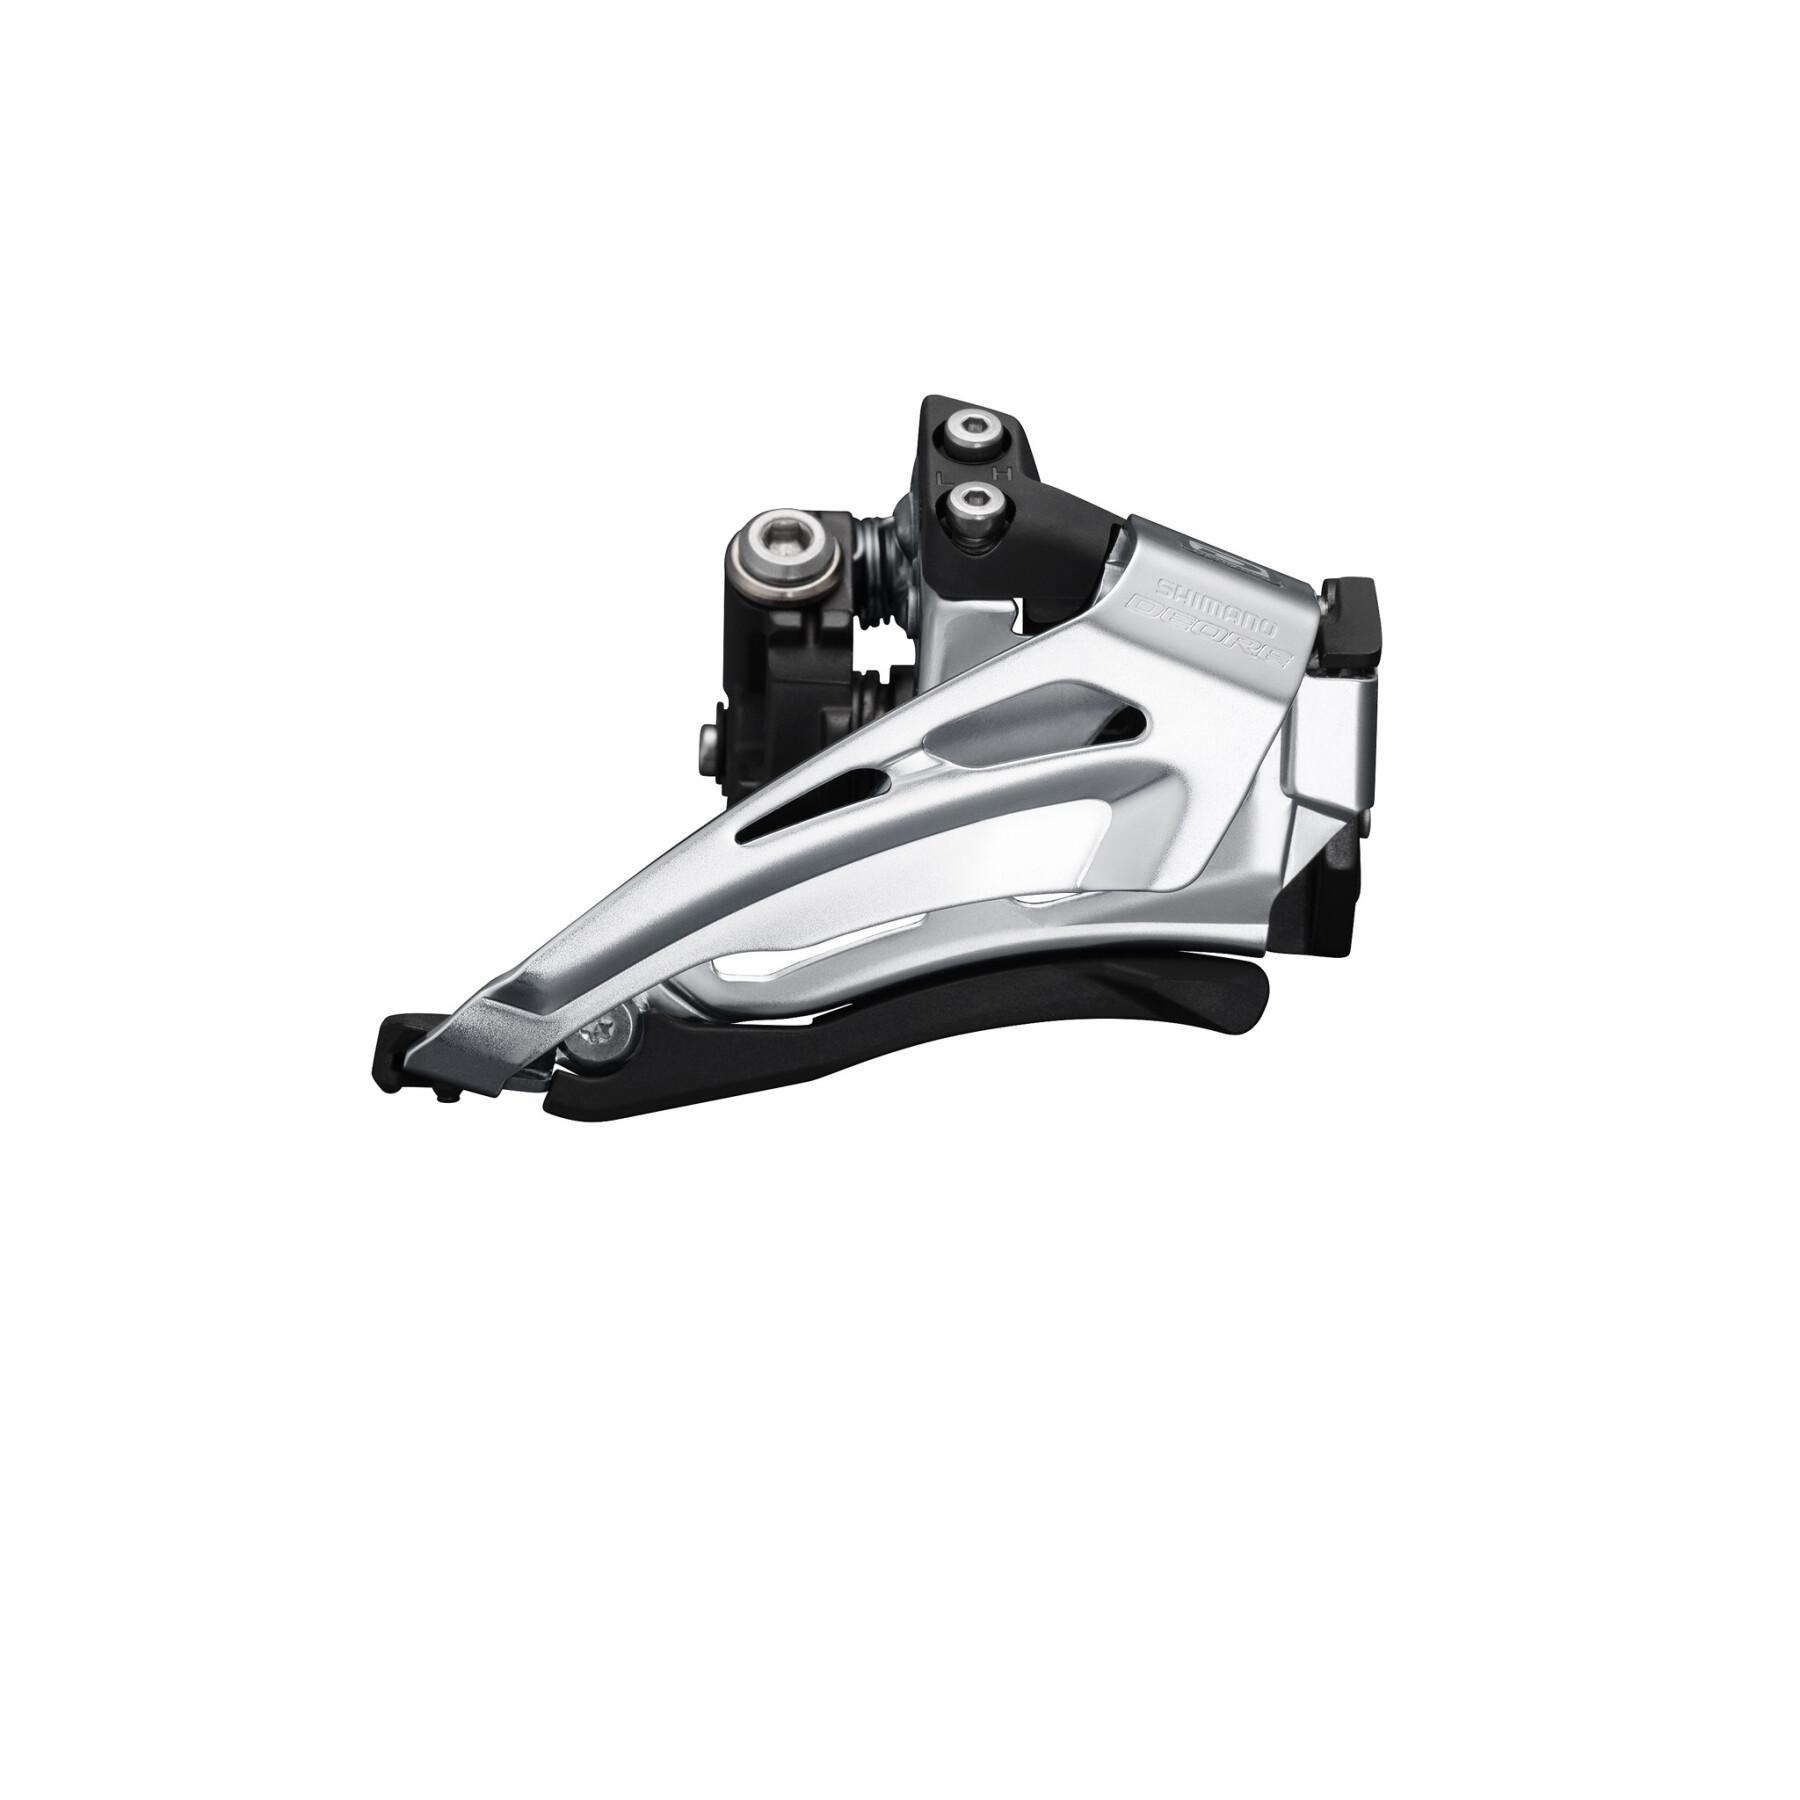 Deragliatore anteriore Shimano deore fd-m6025 top swing 2x10v down pull 66-69º c.bas 28.6/31.8/34.9 34-38d